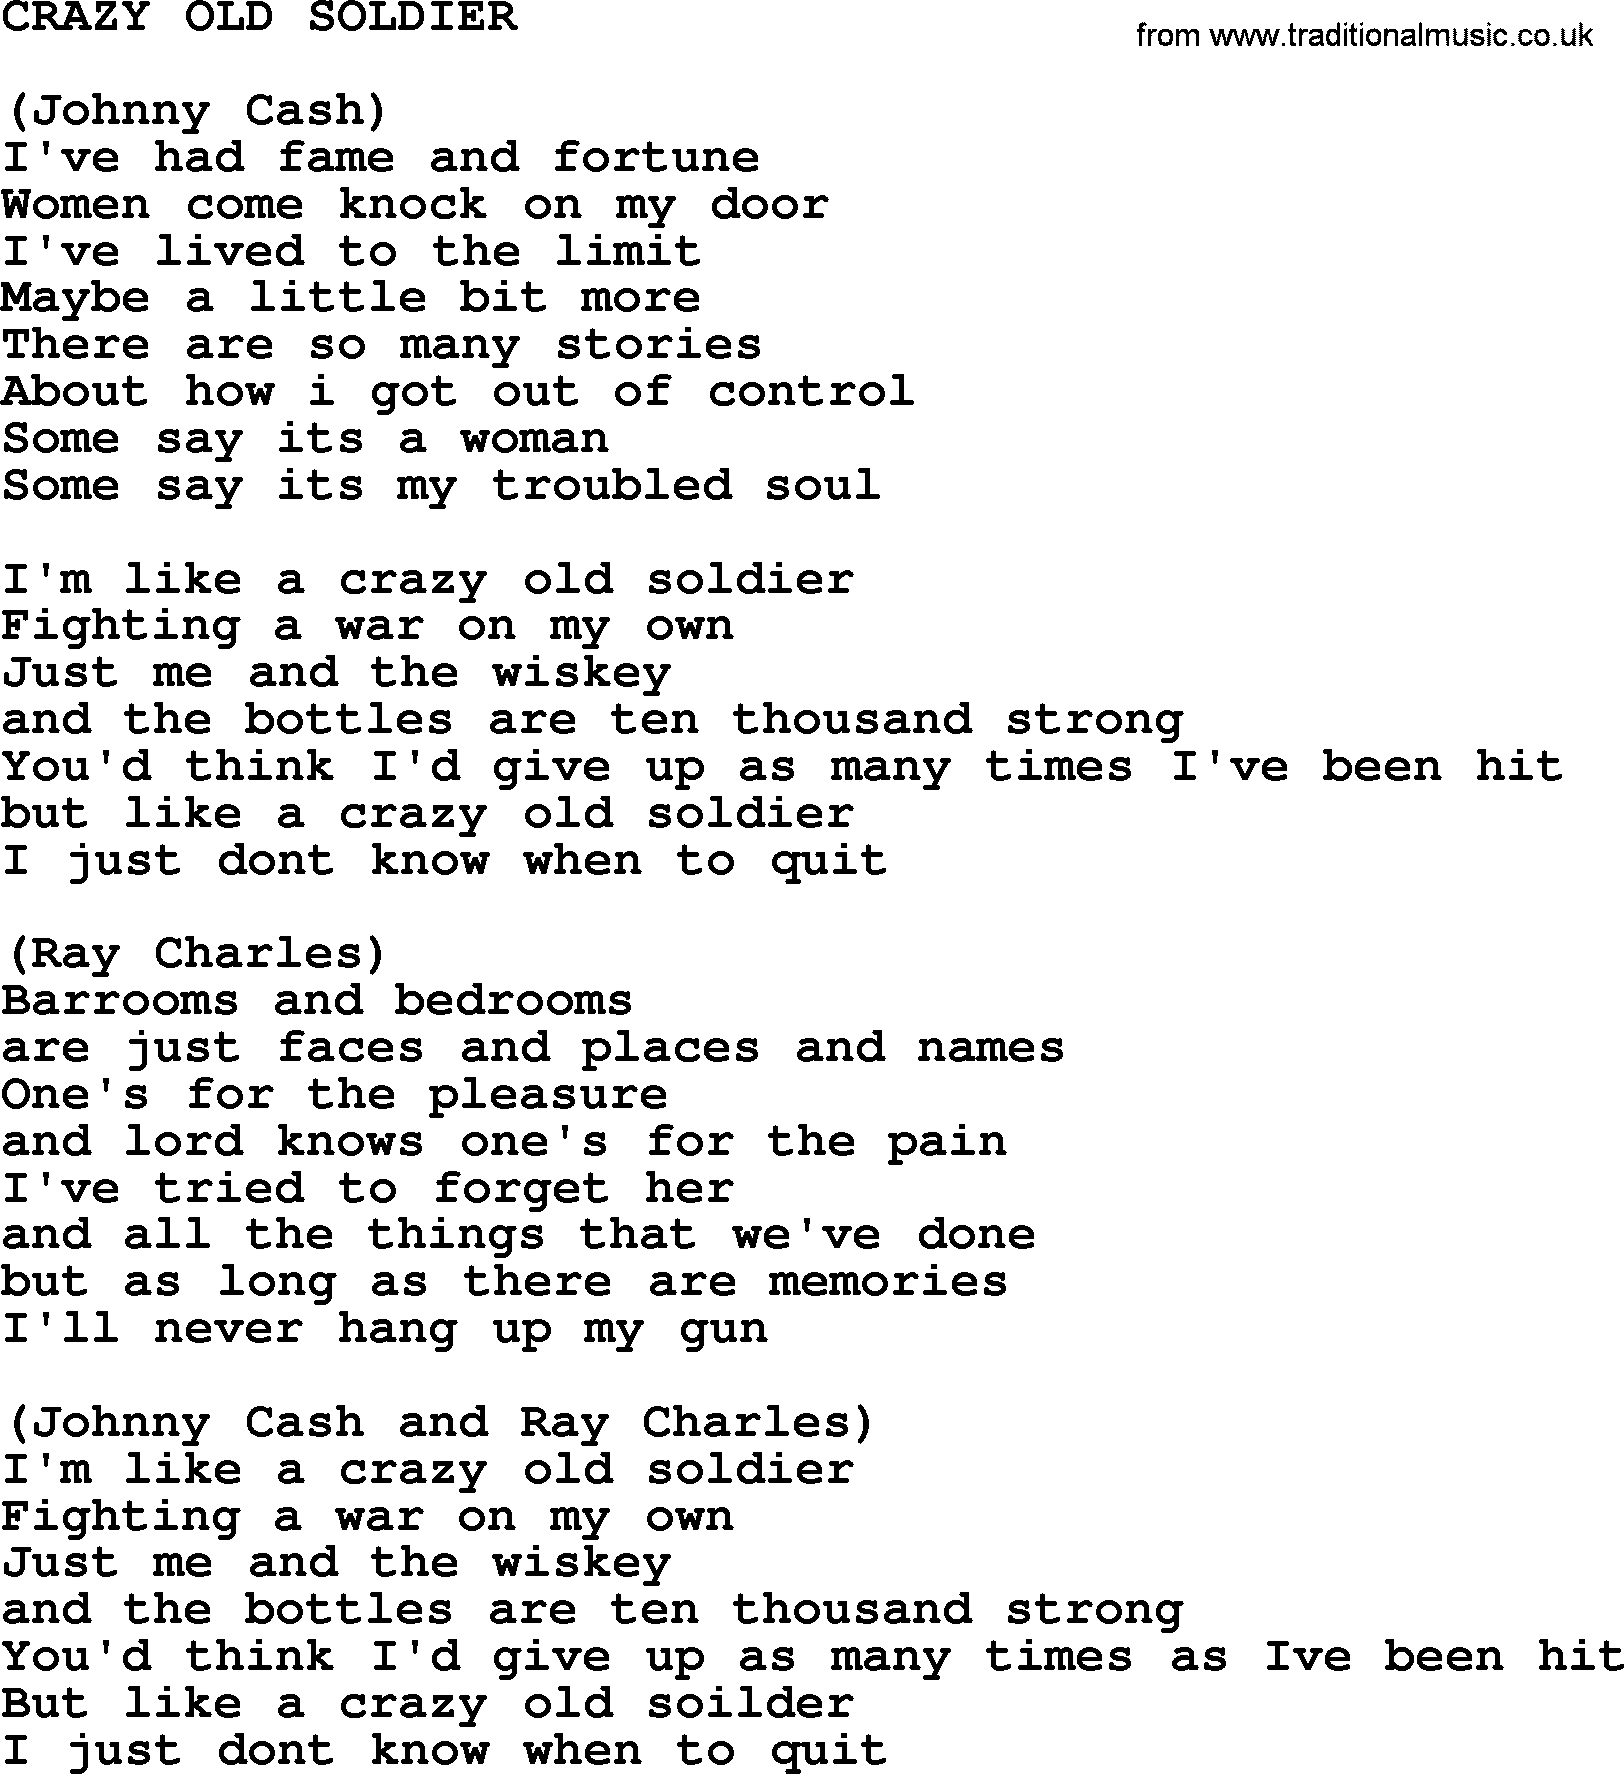 johnny-cash-song-crazy-old-soldier-lyrics